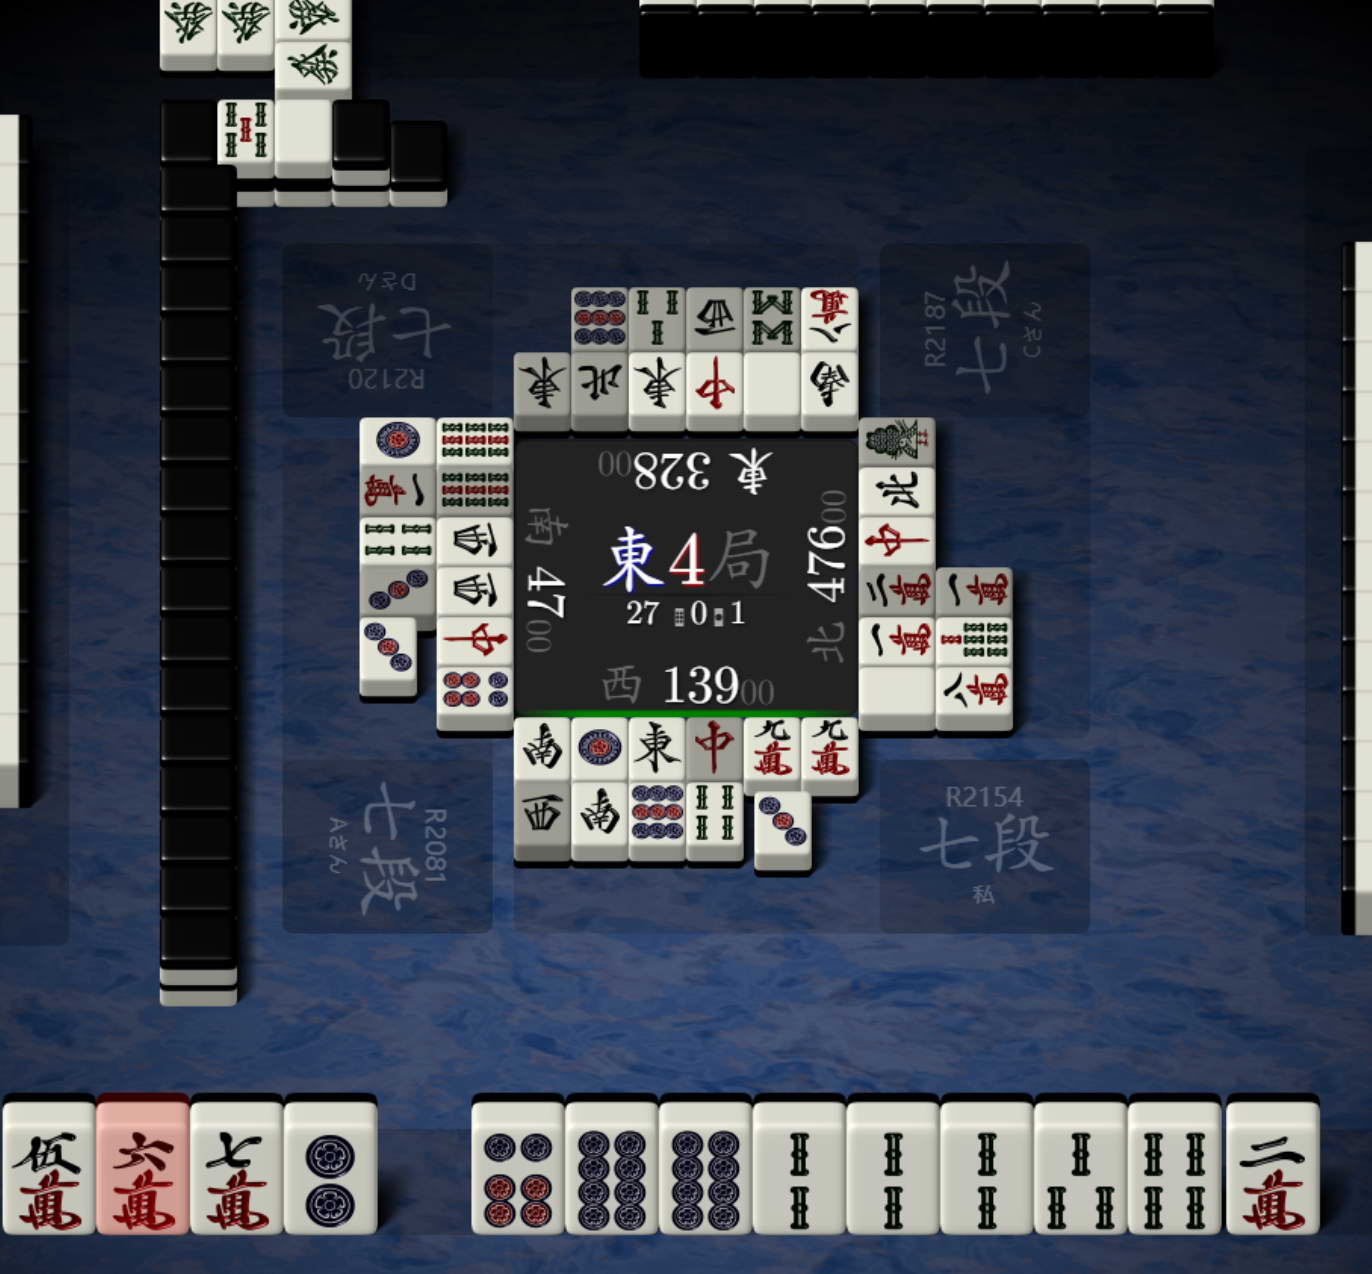 Building an AI Mahjong Player with Convolutional Neural Network